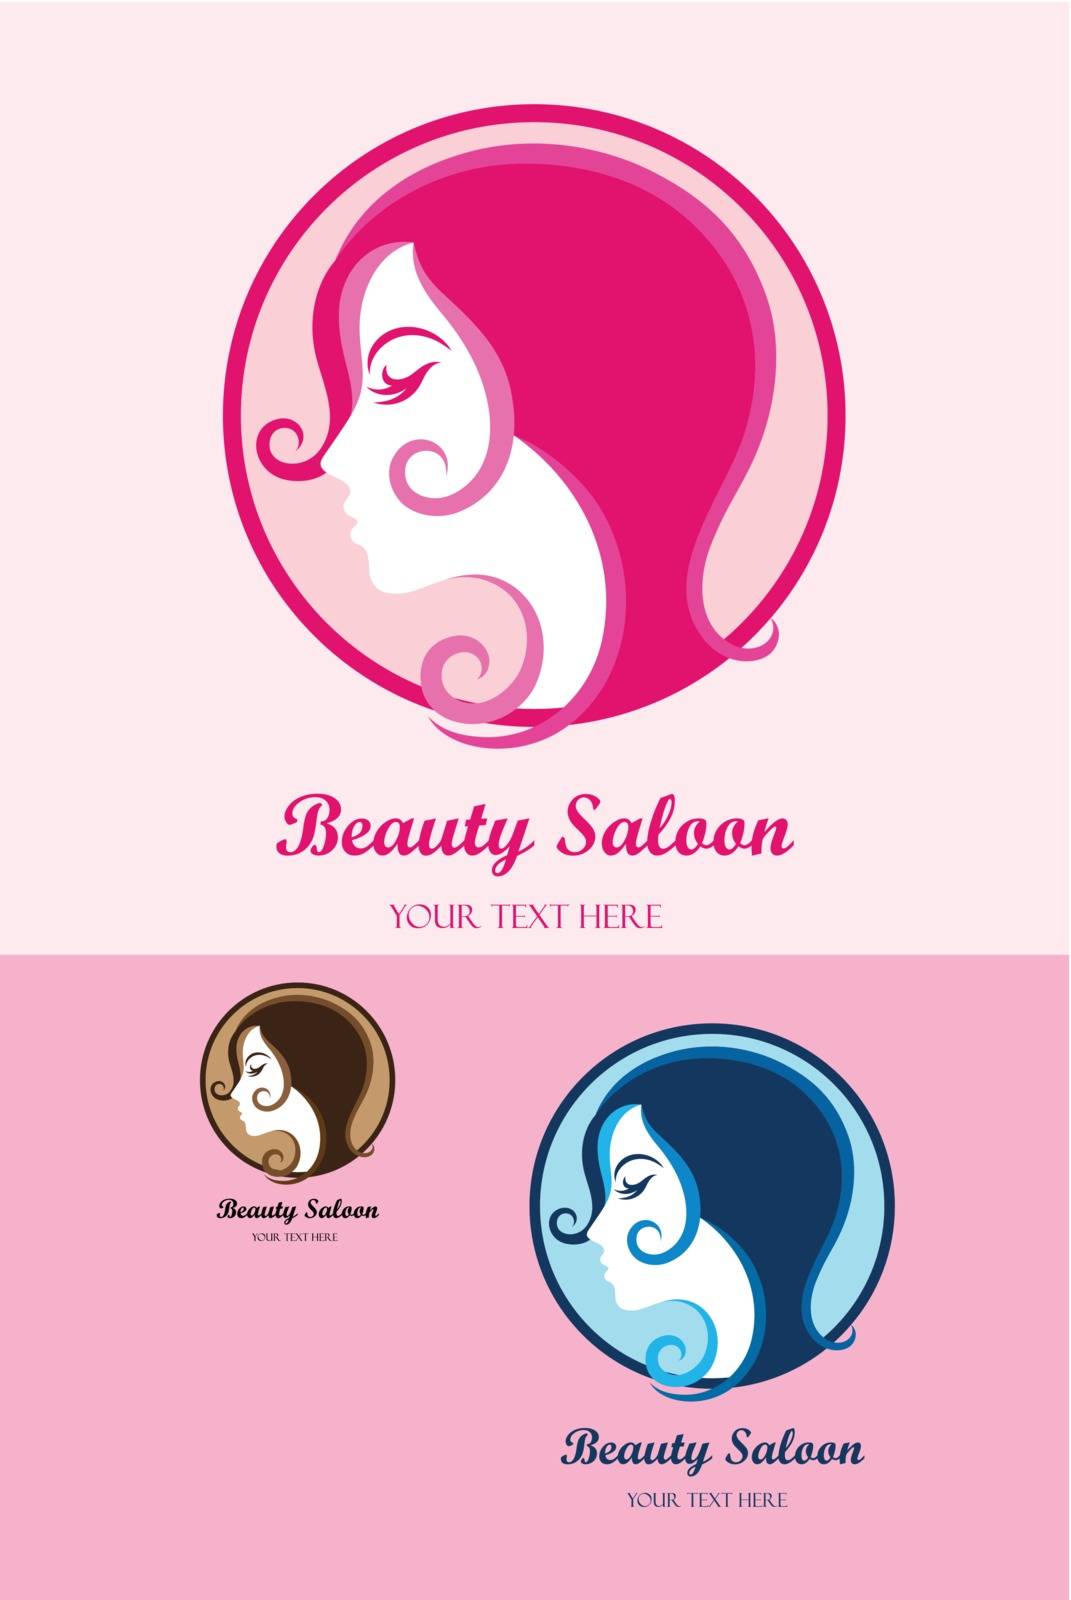 Beauty Saloon by martinussumbaji